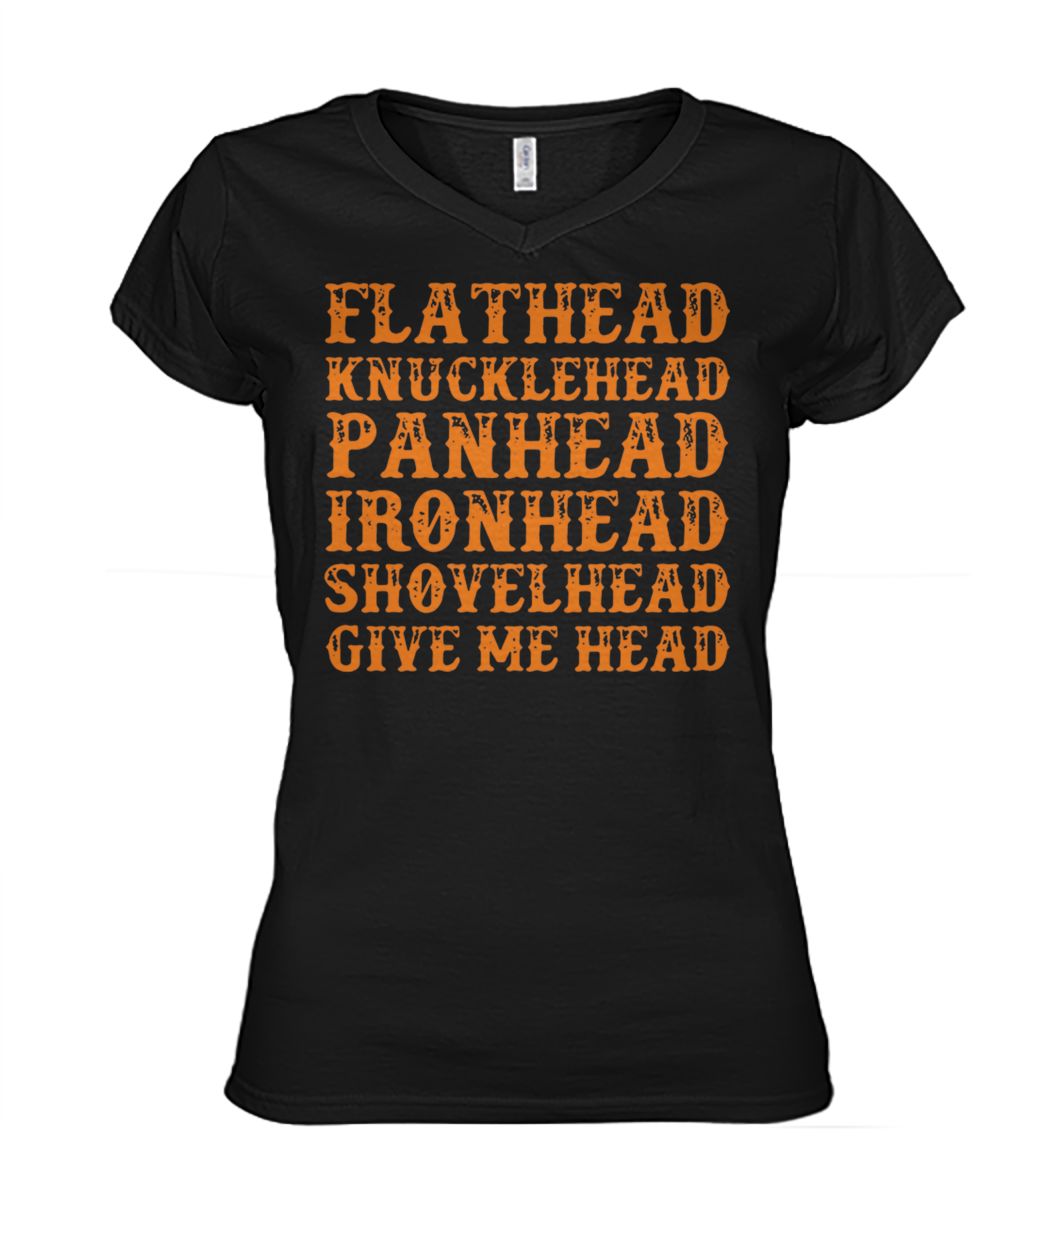 Flathead knucklehead panhead ironhead shovelhead give me head women's v-neck